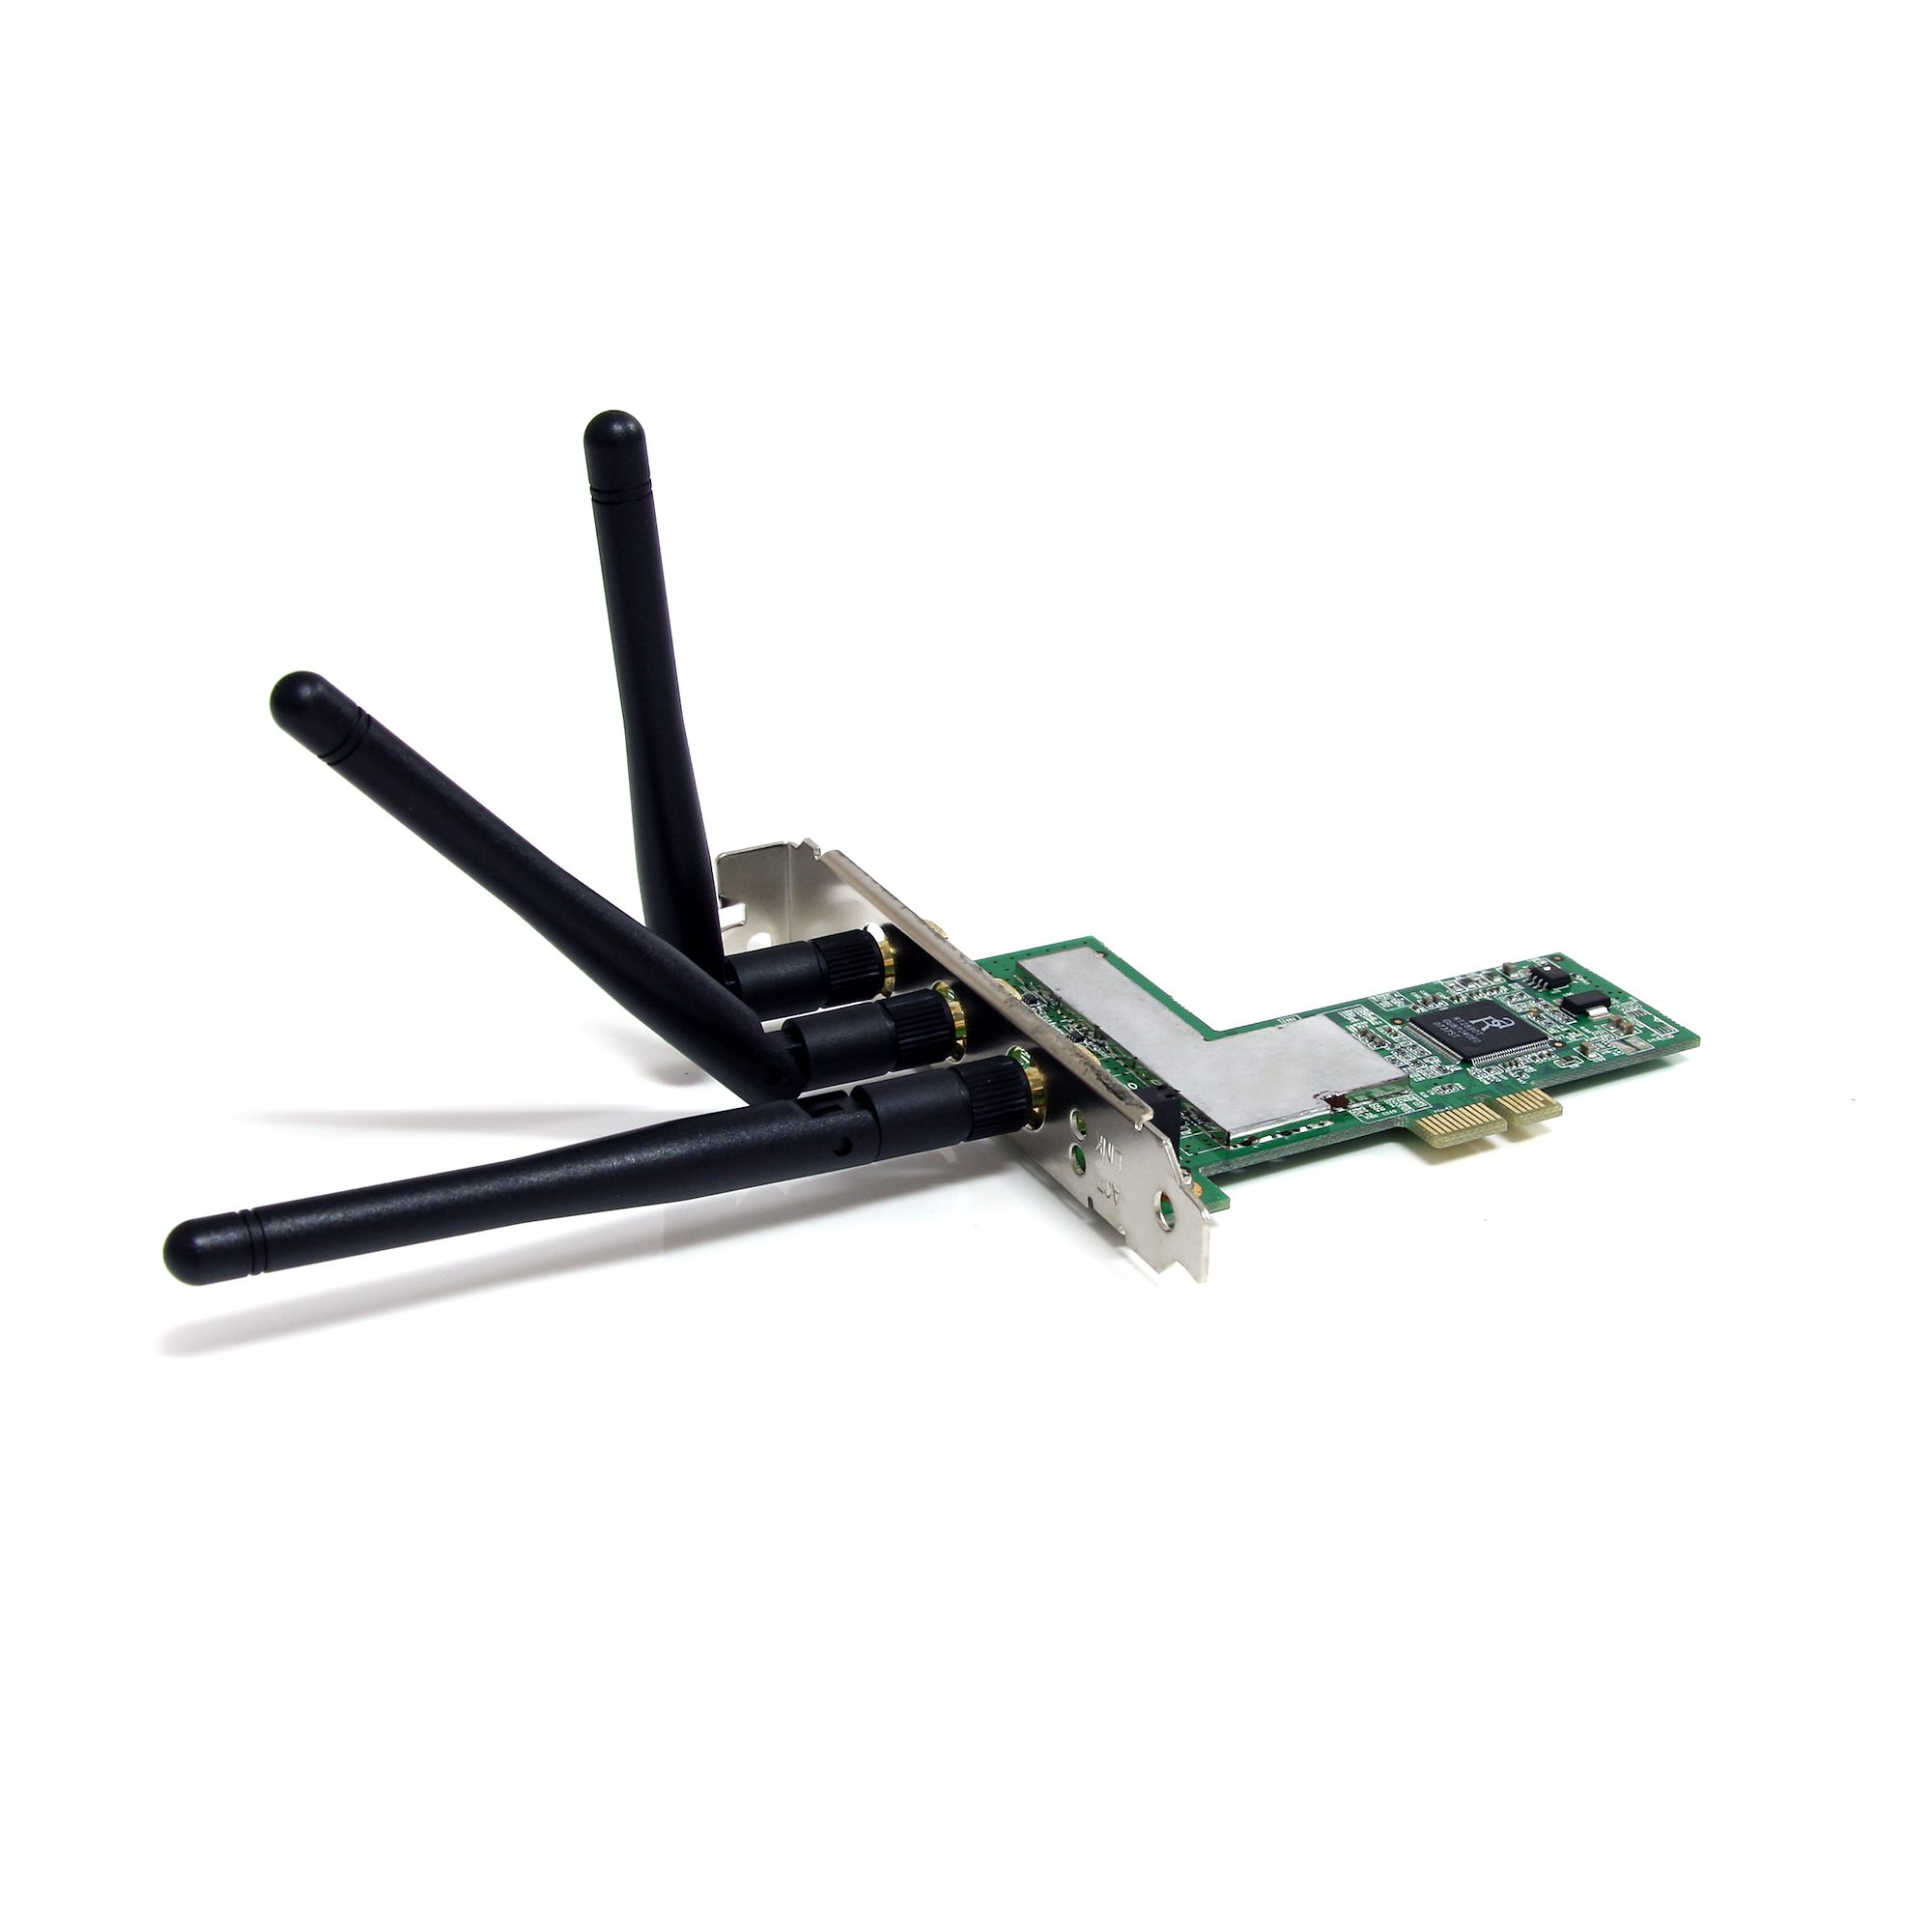 Acer wireless lan. PCIE lan 802.11n. 300mbps Wireless 802.11n PCI Adapter. 802.11N Wireless lan Card. Broadcom 802.11n PCI-E.